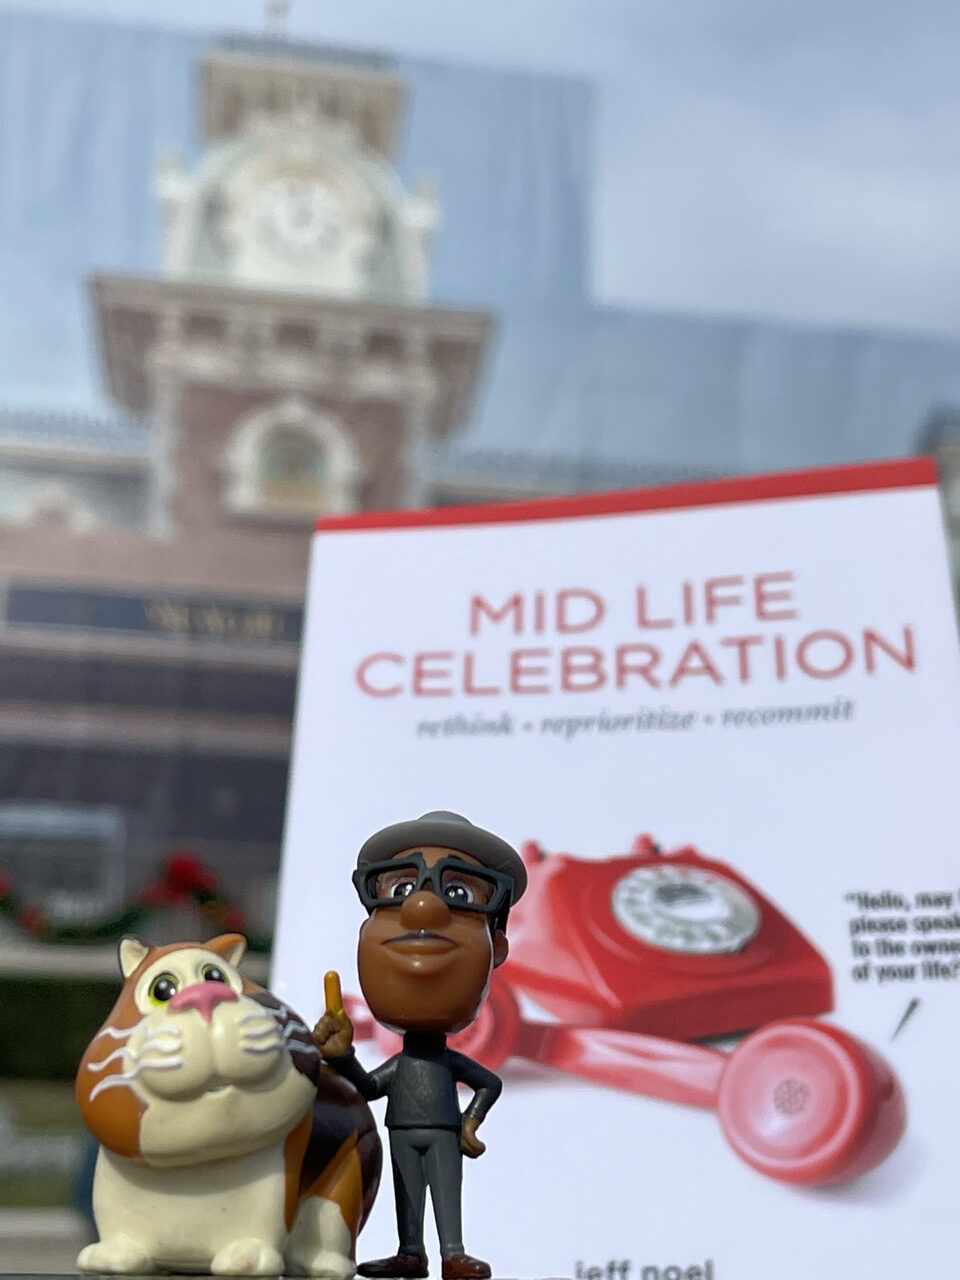 Midlife celebration book with Disney Soul toys